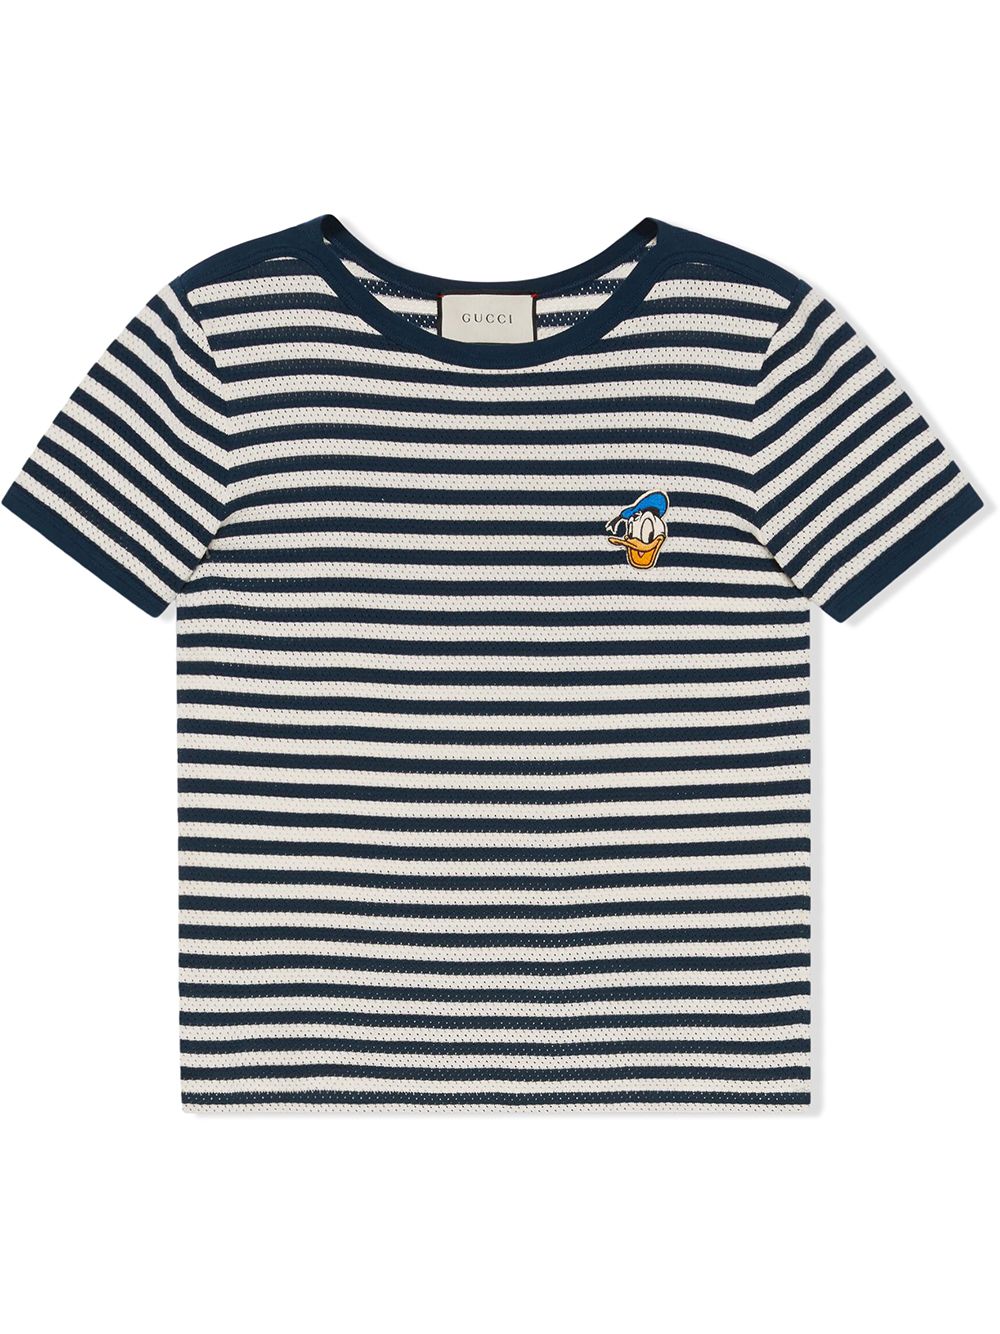 Gucci Disney Donald Duck Monogram Silk Shirt